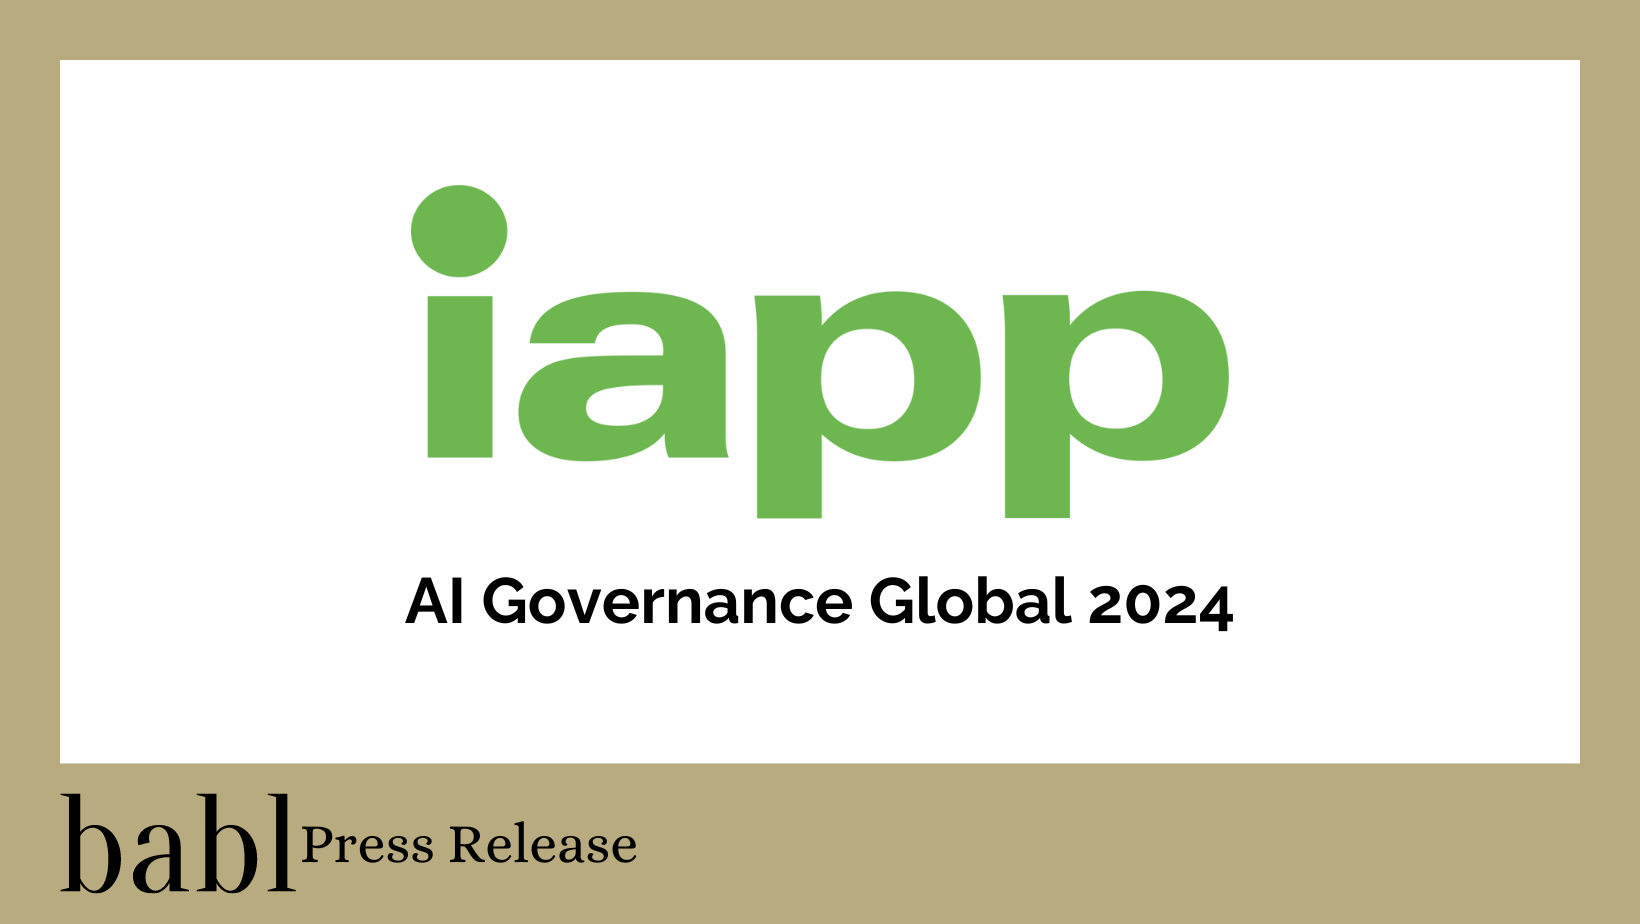 BABL AI CEO Leads Panel on AI Auditing at IAPP AI Governance Global 2024